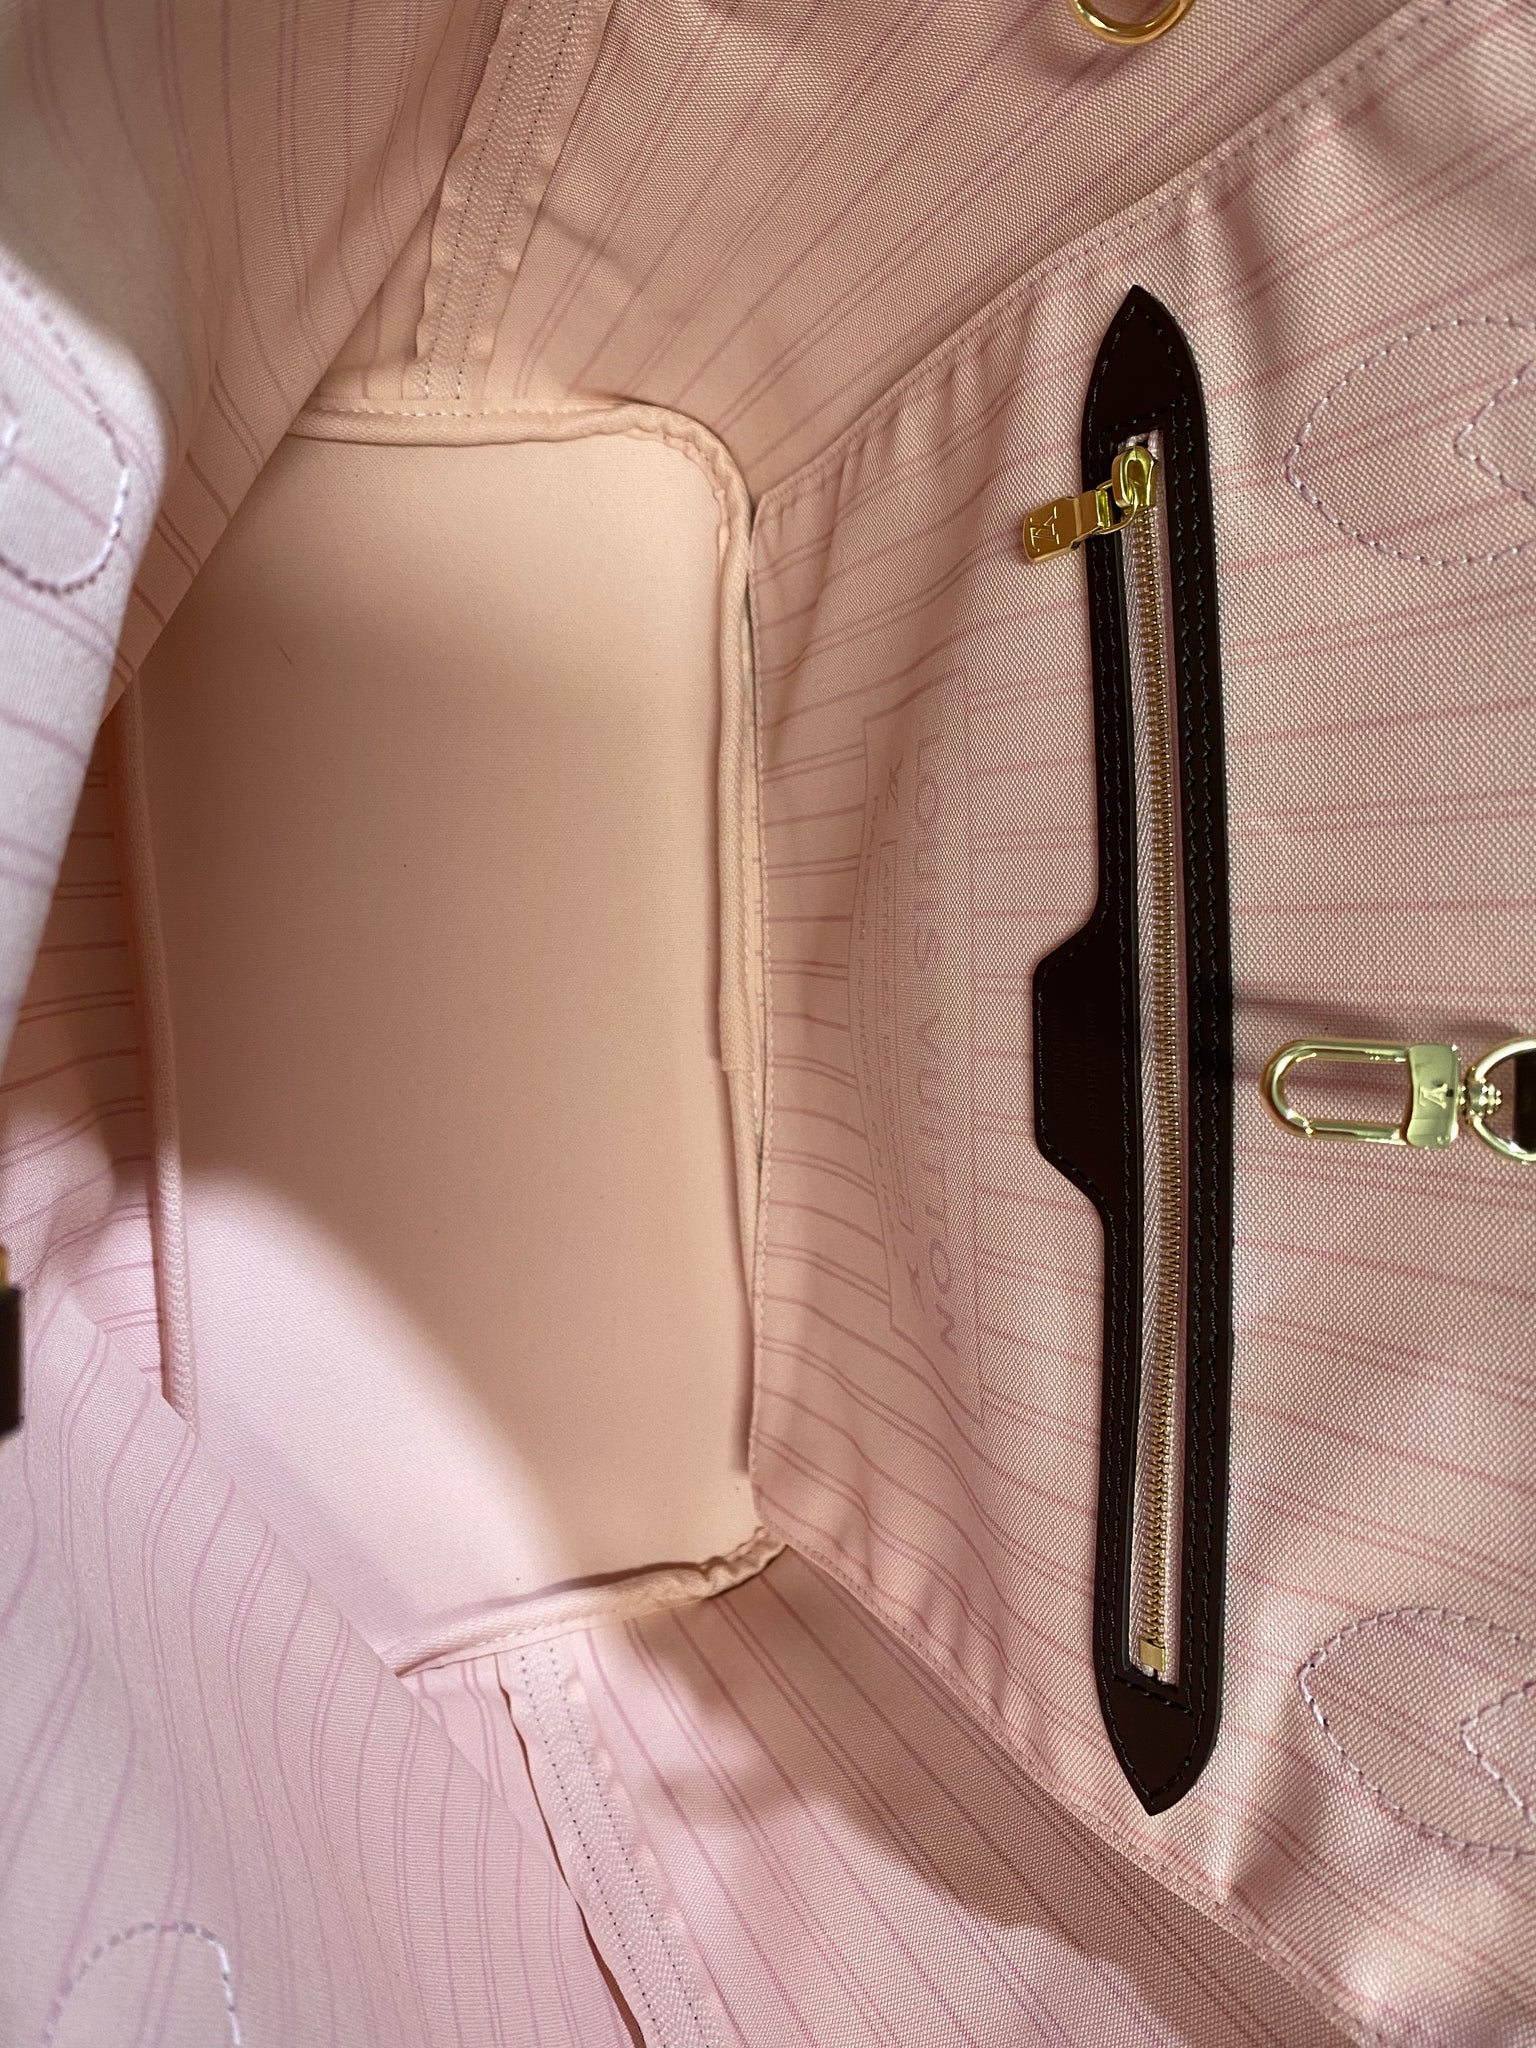 Louis Vuitton Neverfull Damier Ebene with Rose ballerine interior